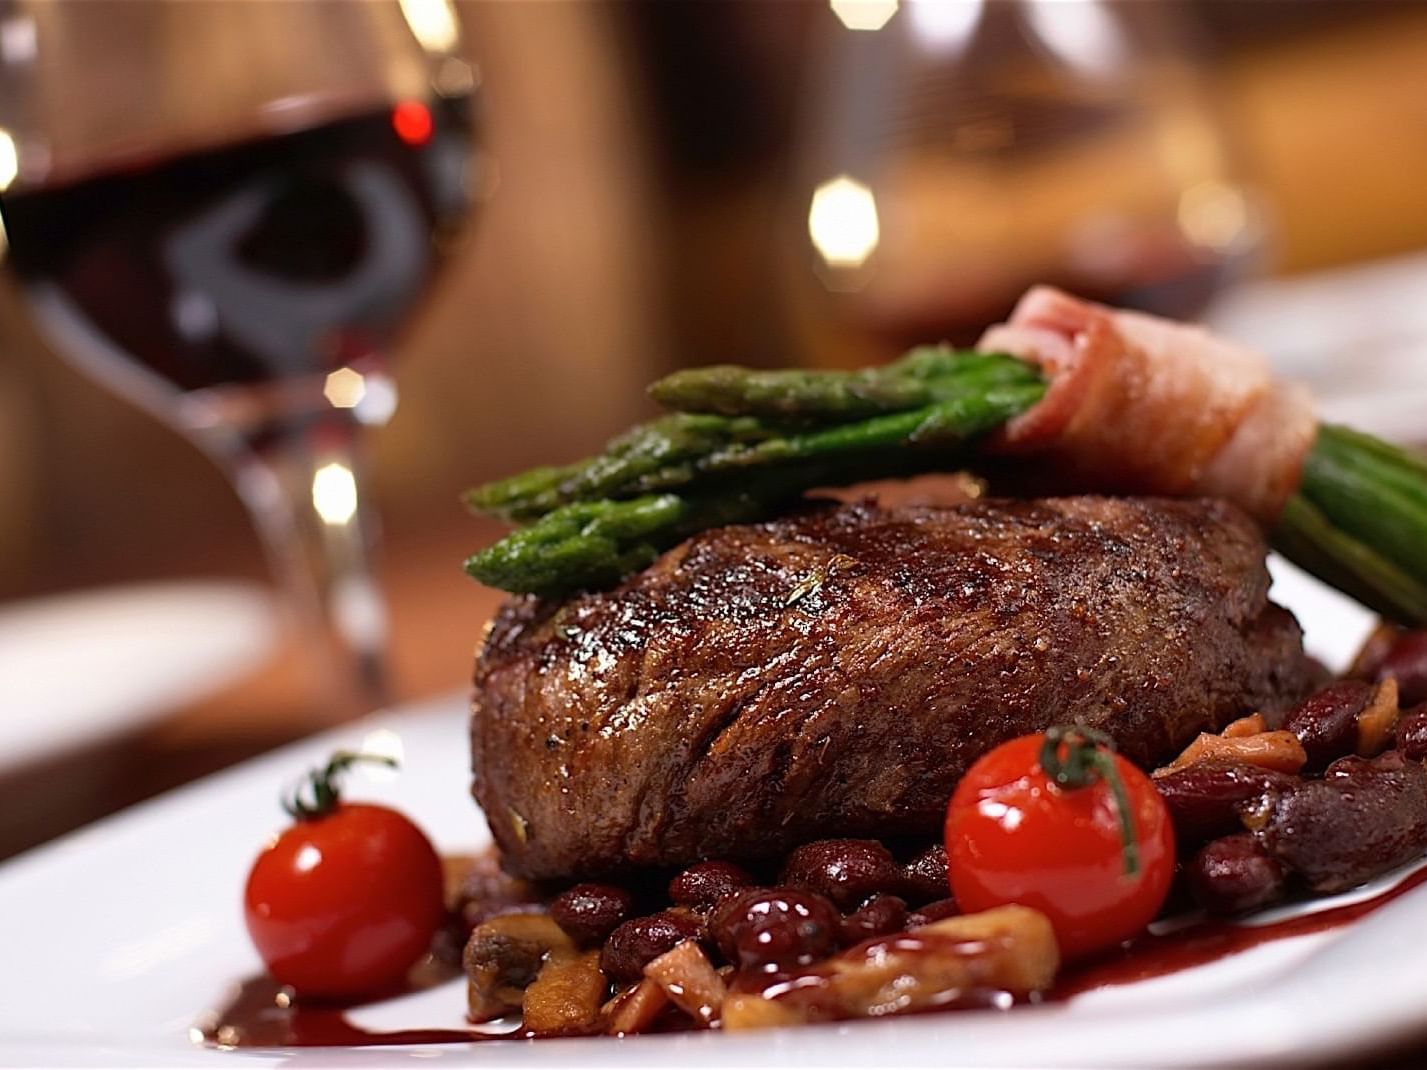 steak, mushrooms and red wine